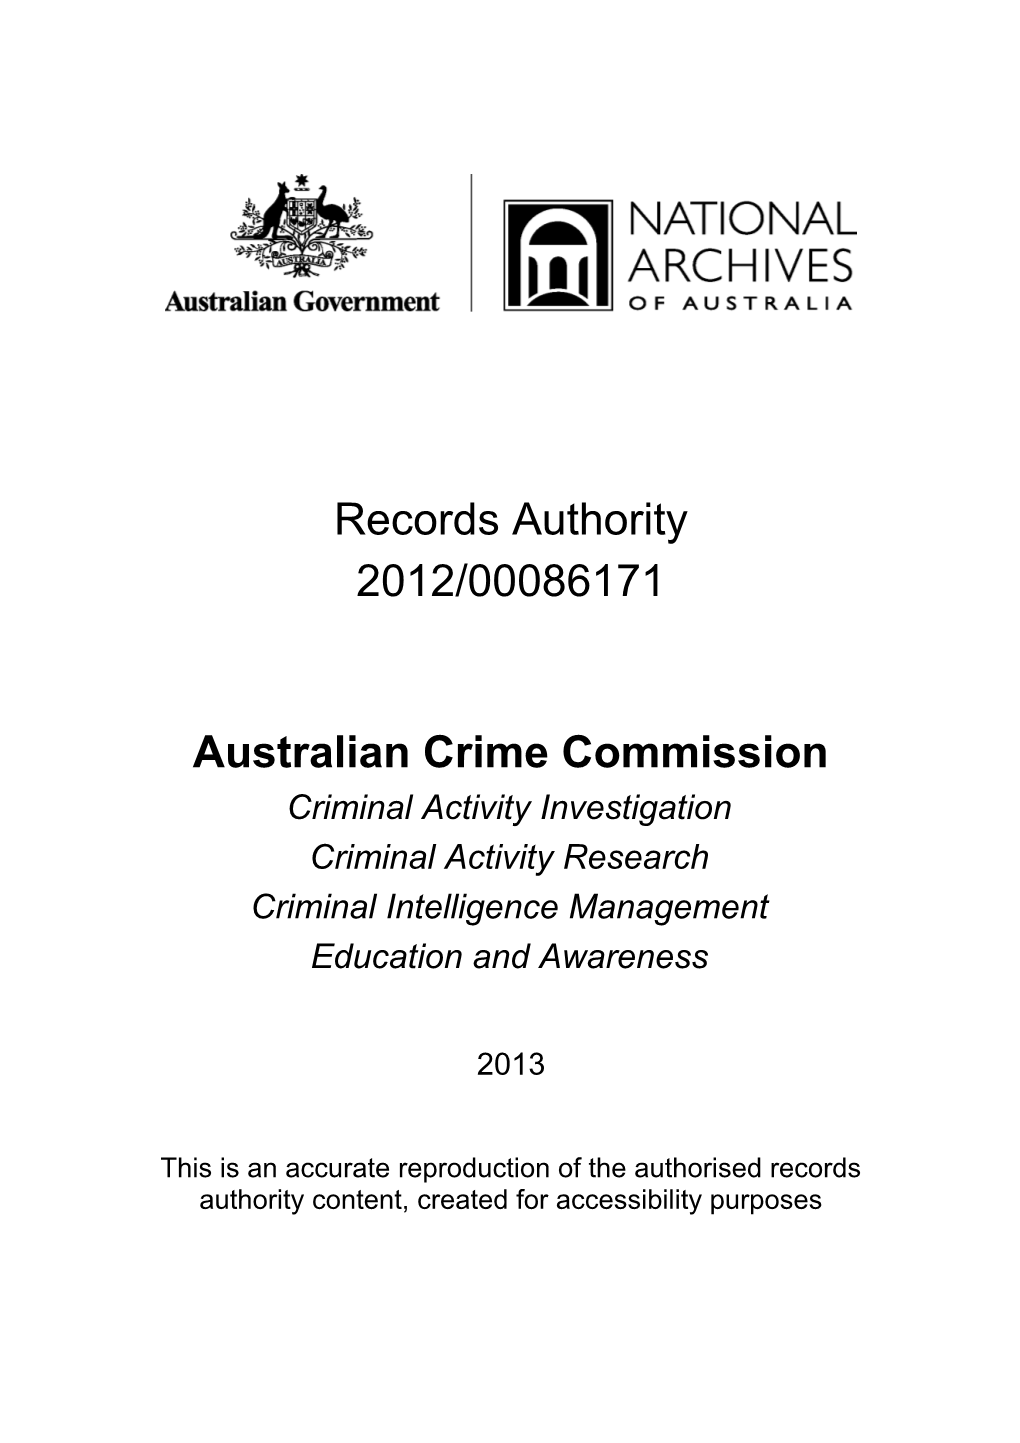 Australian Crime Commission (ACC) - Records Authority - 2012 00086171